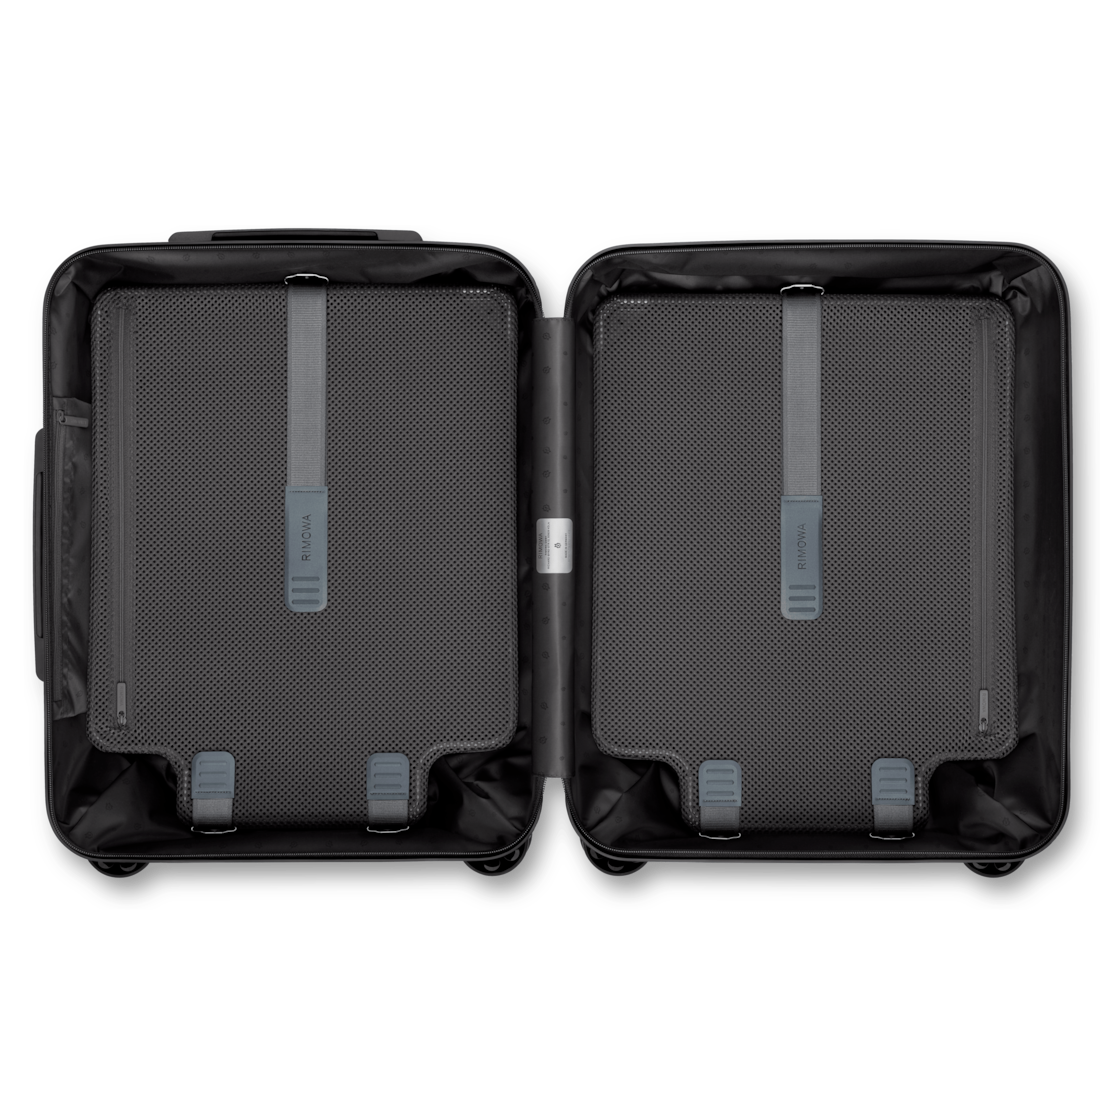 Essential Cabin Plus Large Carry-On Suitcase | Matte Black | RIMOWA